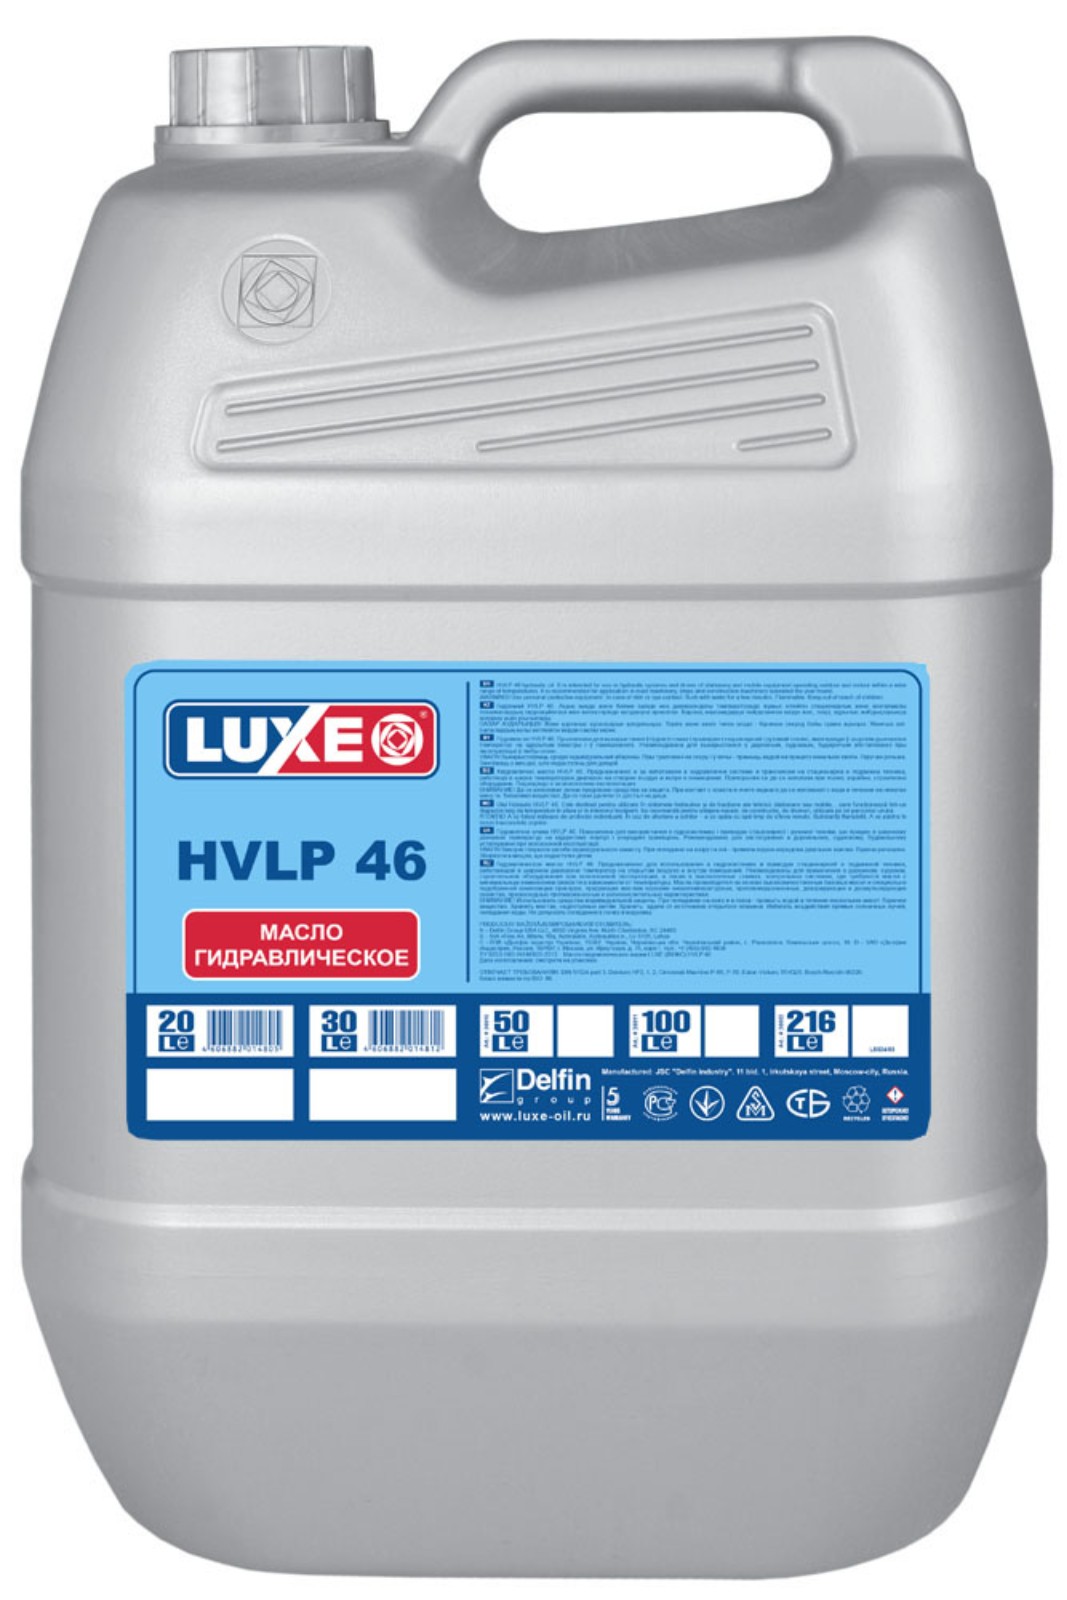 Масло гидравлическое LUXE HVLP 46 20л